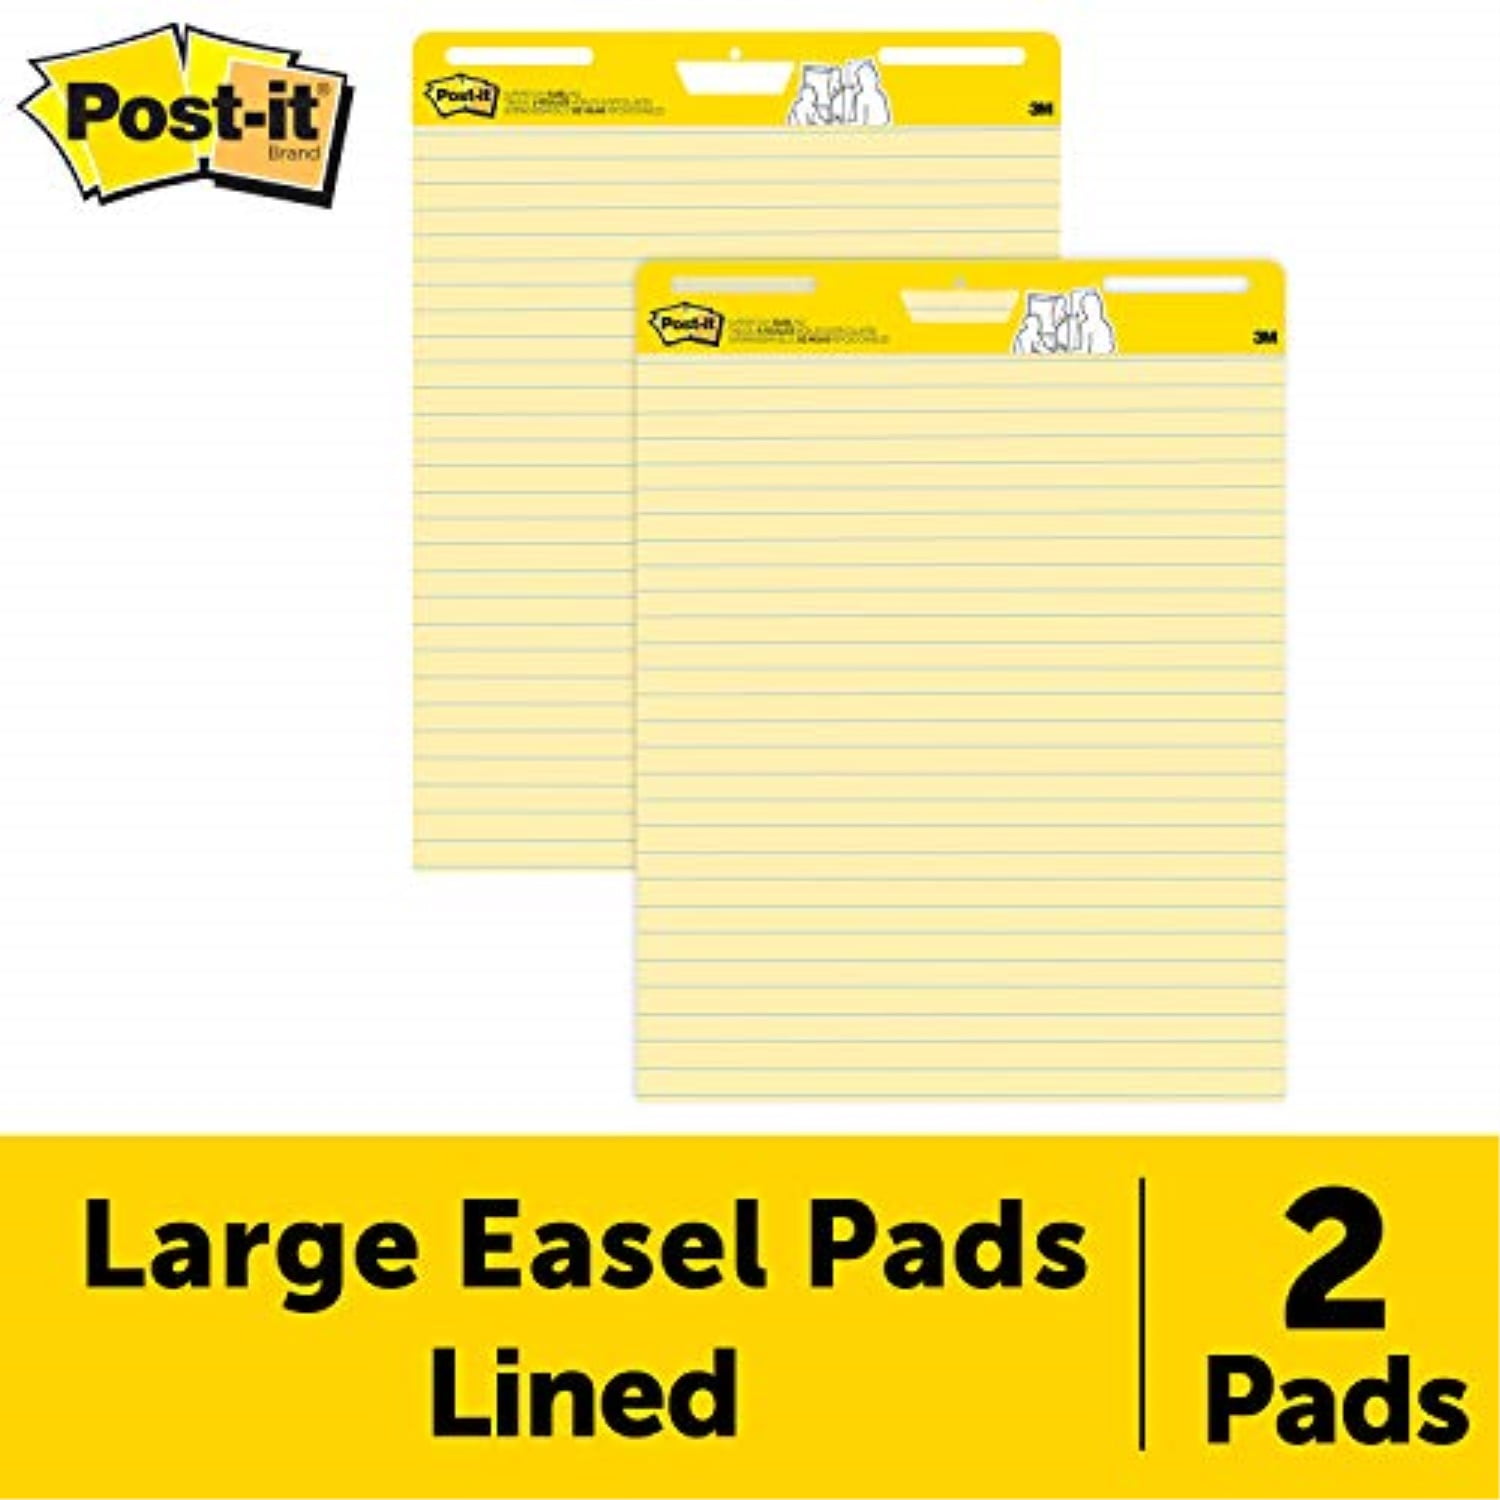 Easel Pads in Presentation Boards & Presentation Easels 